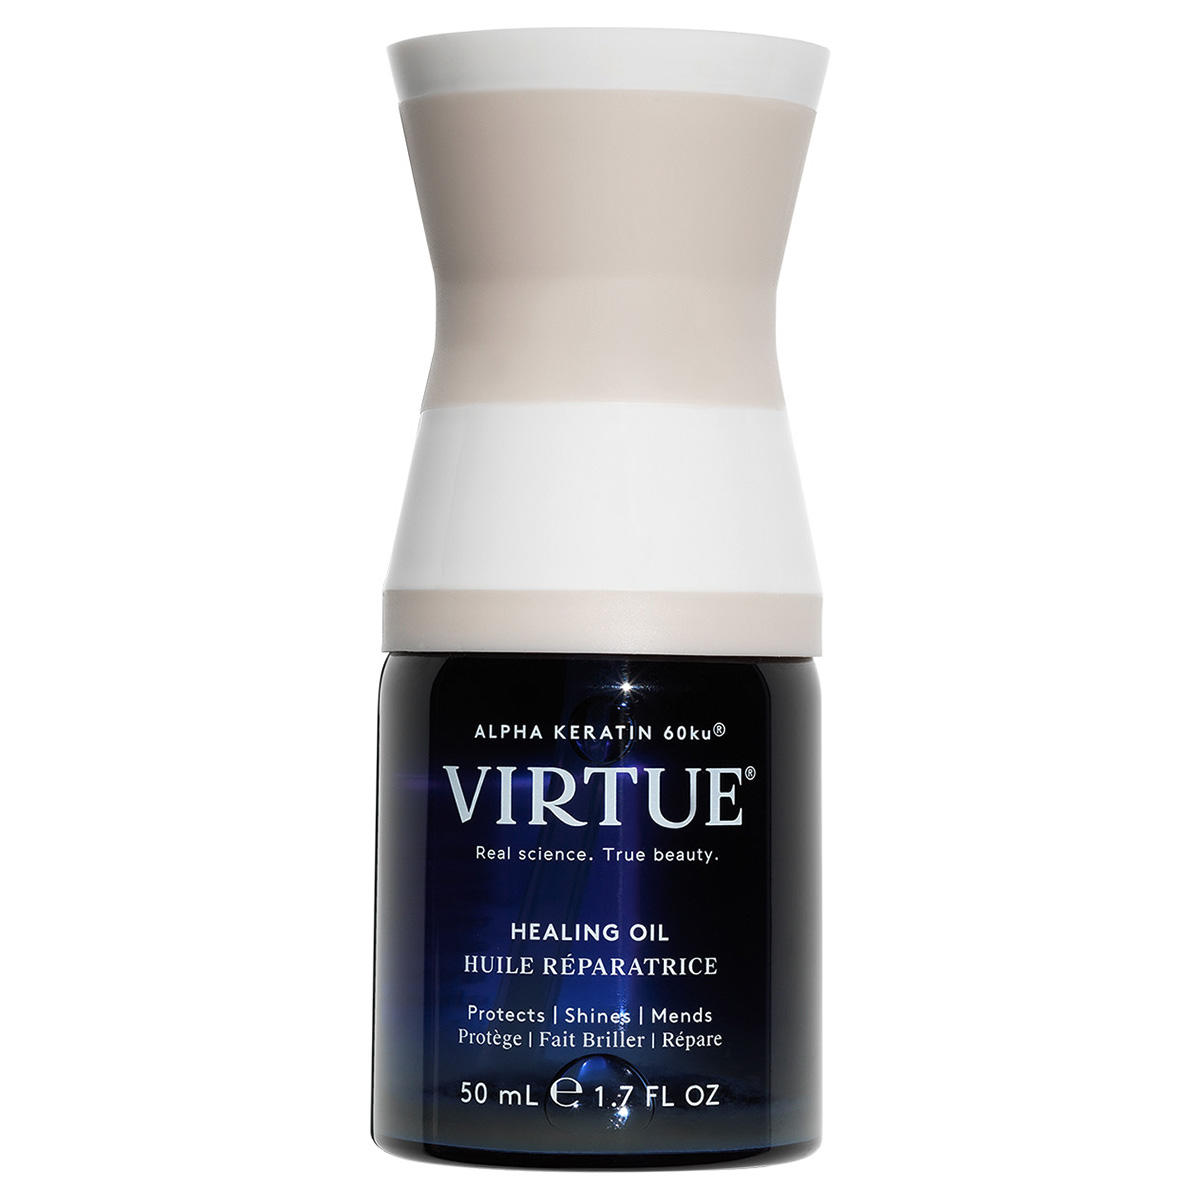 Virtue Healing Oil 50 ml - 1